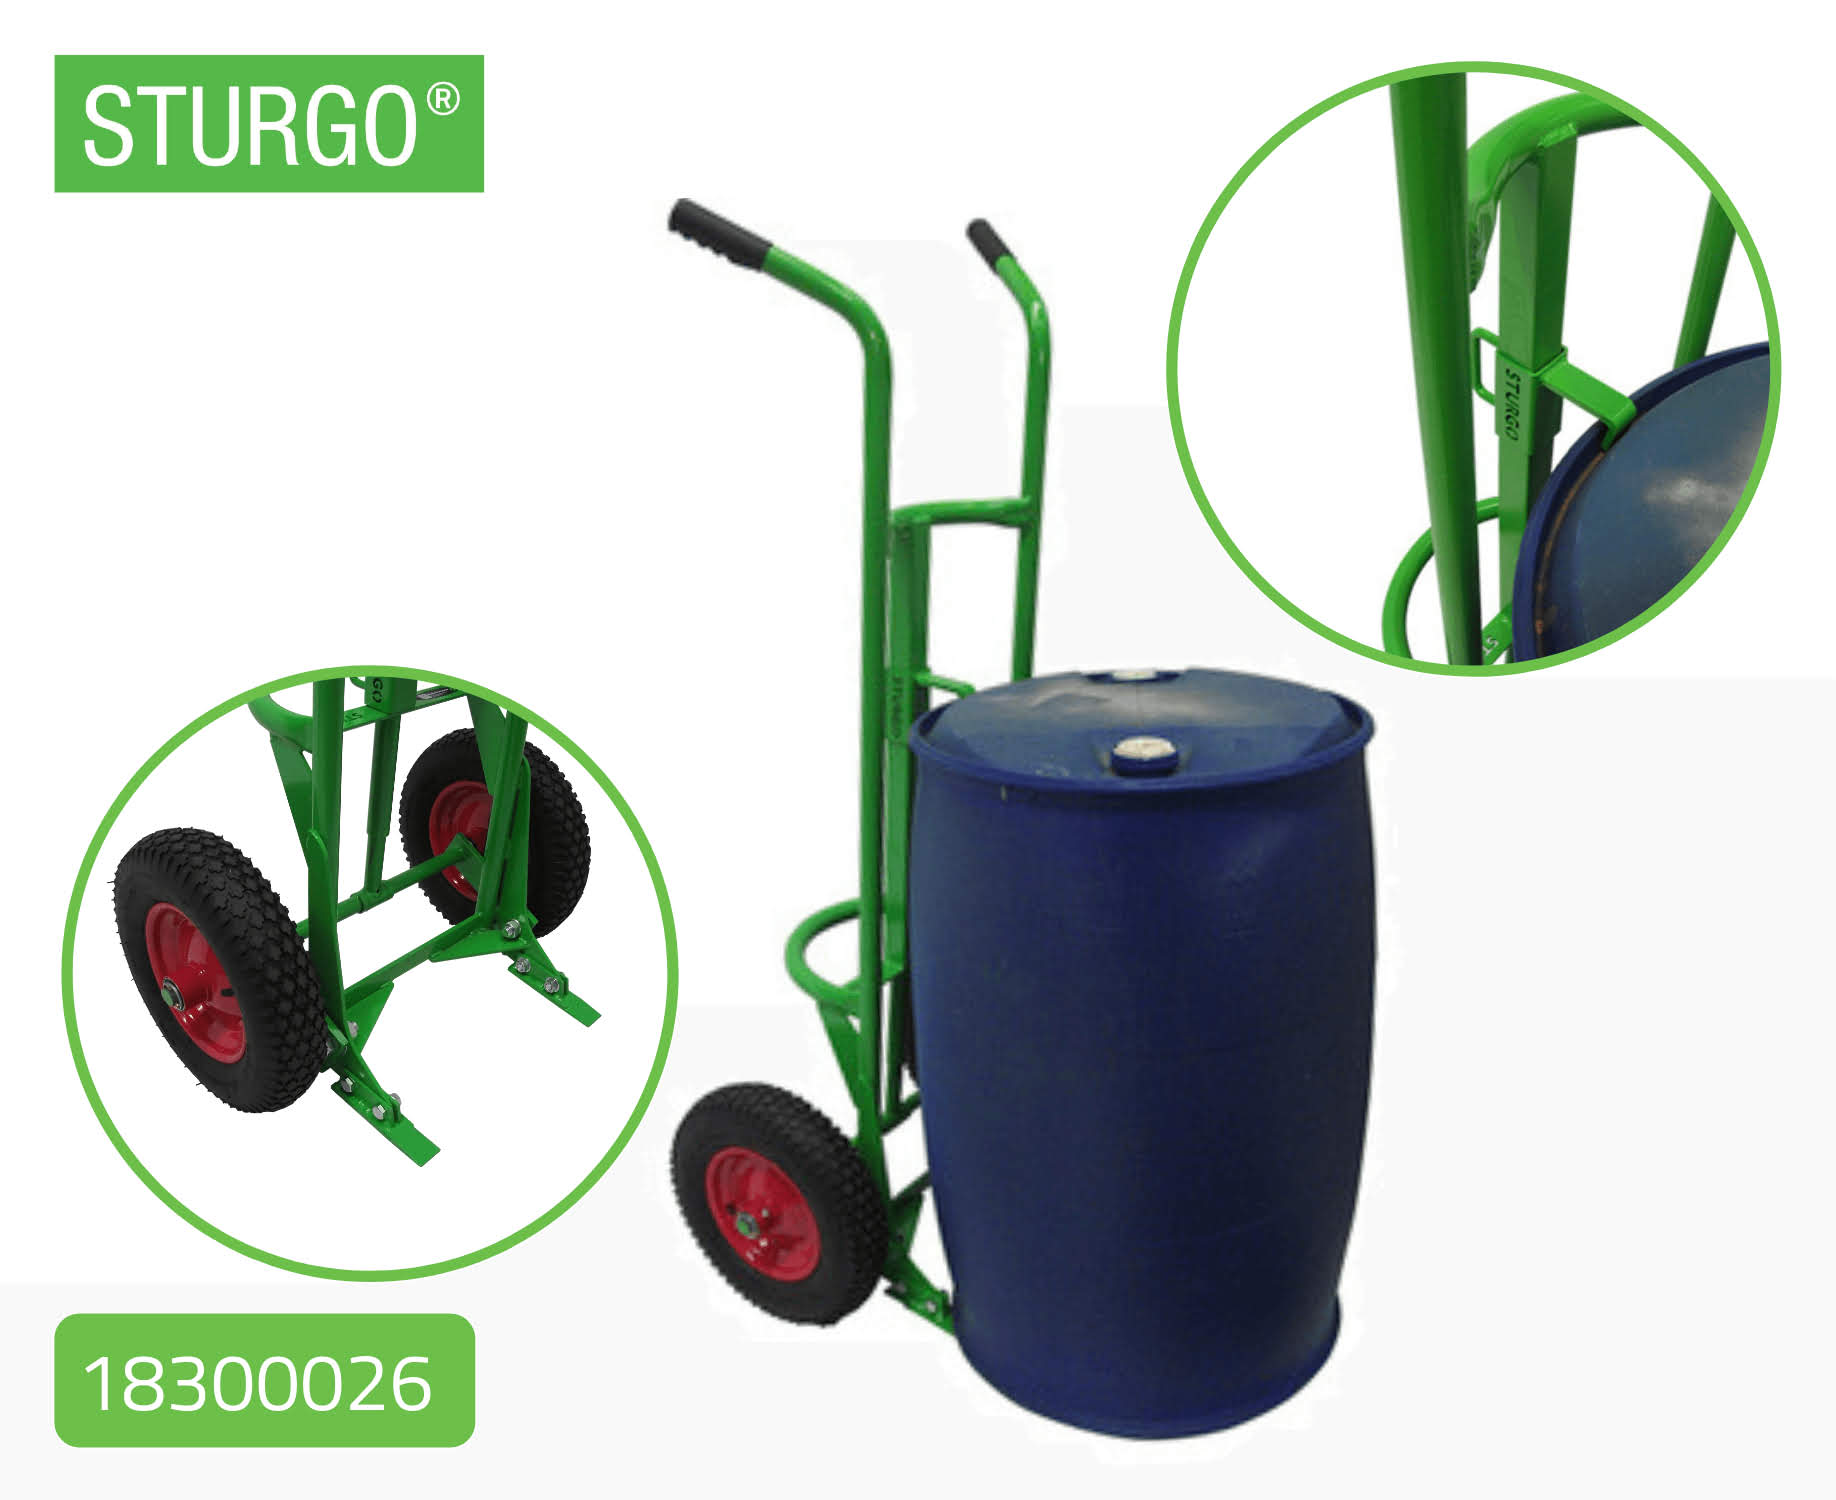 STURGO® Heavy Duty Drum Hand Trolley